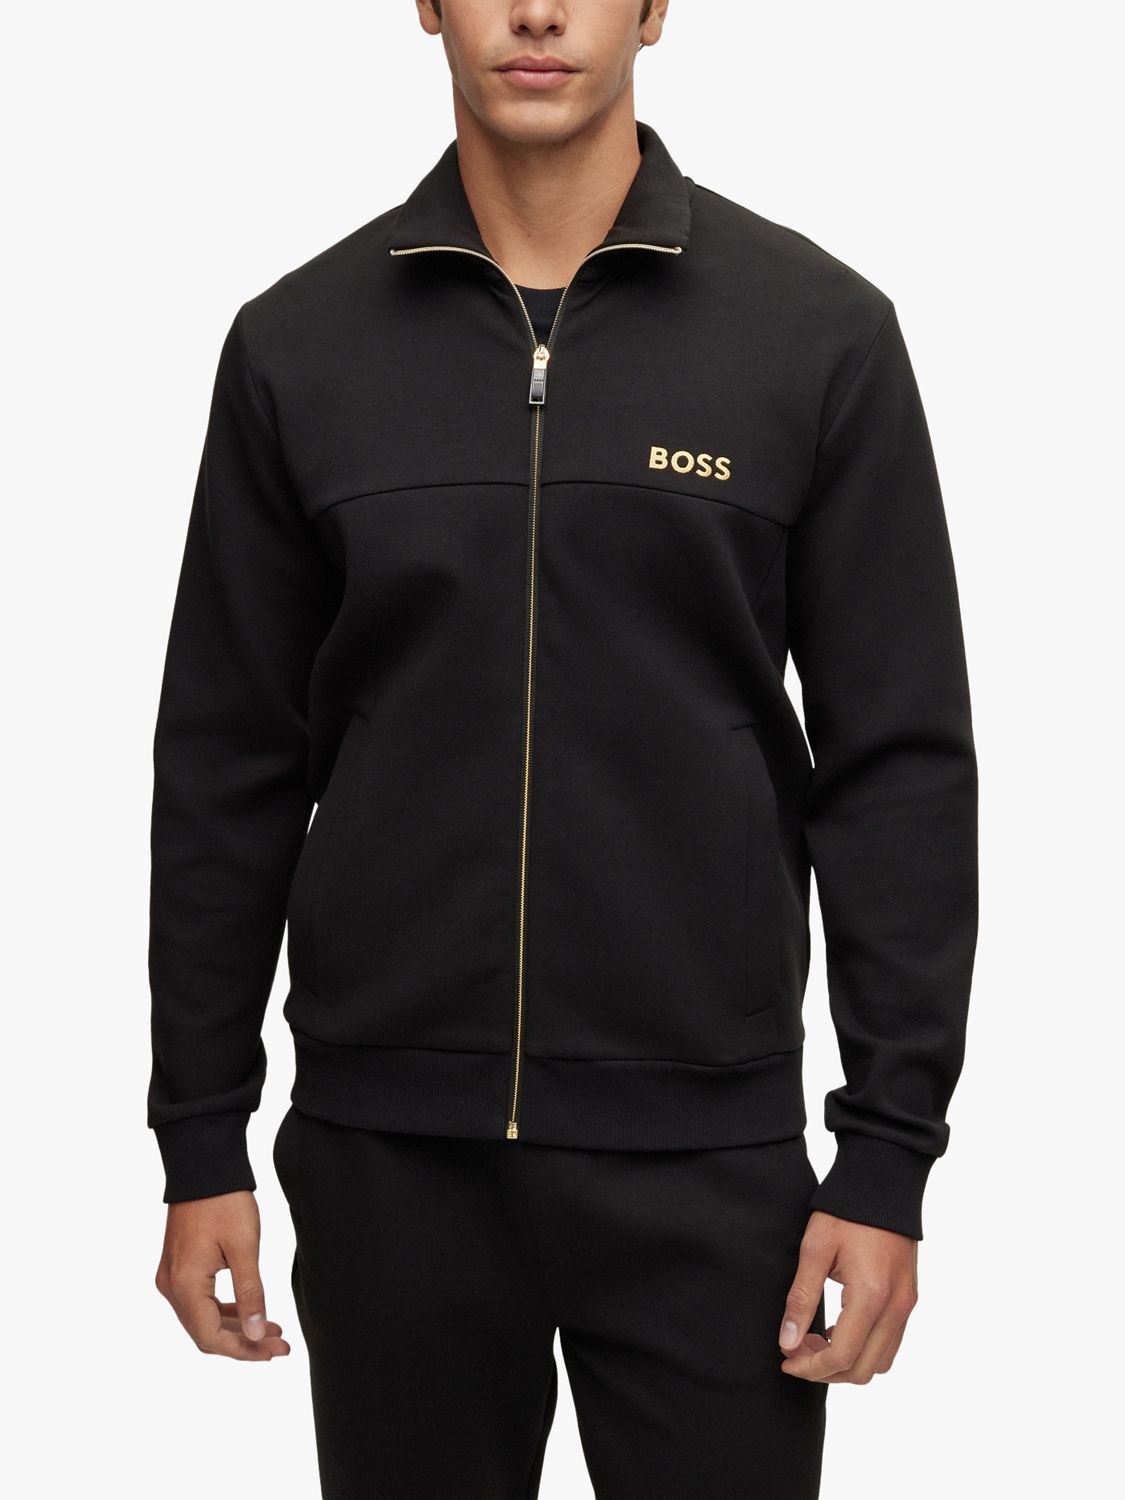 BOSS Skaz Zip Sweatshirt, Black at John Lewis &